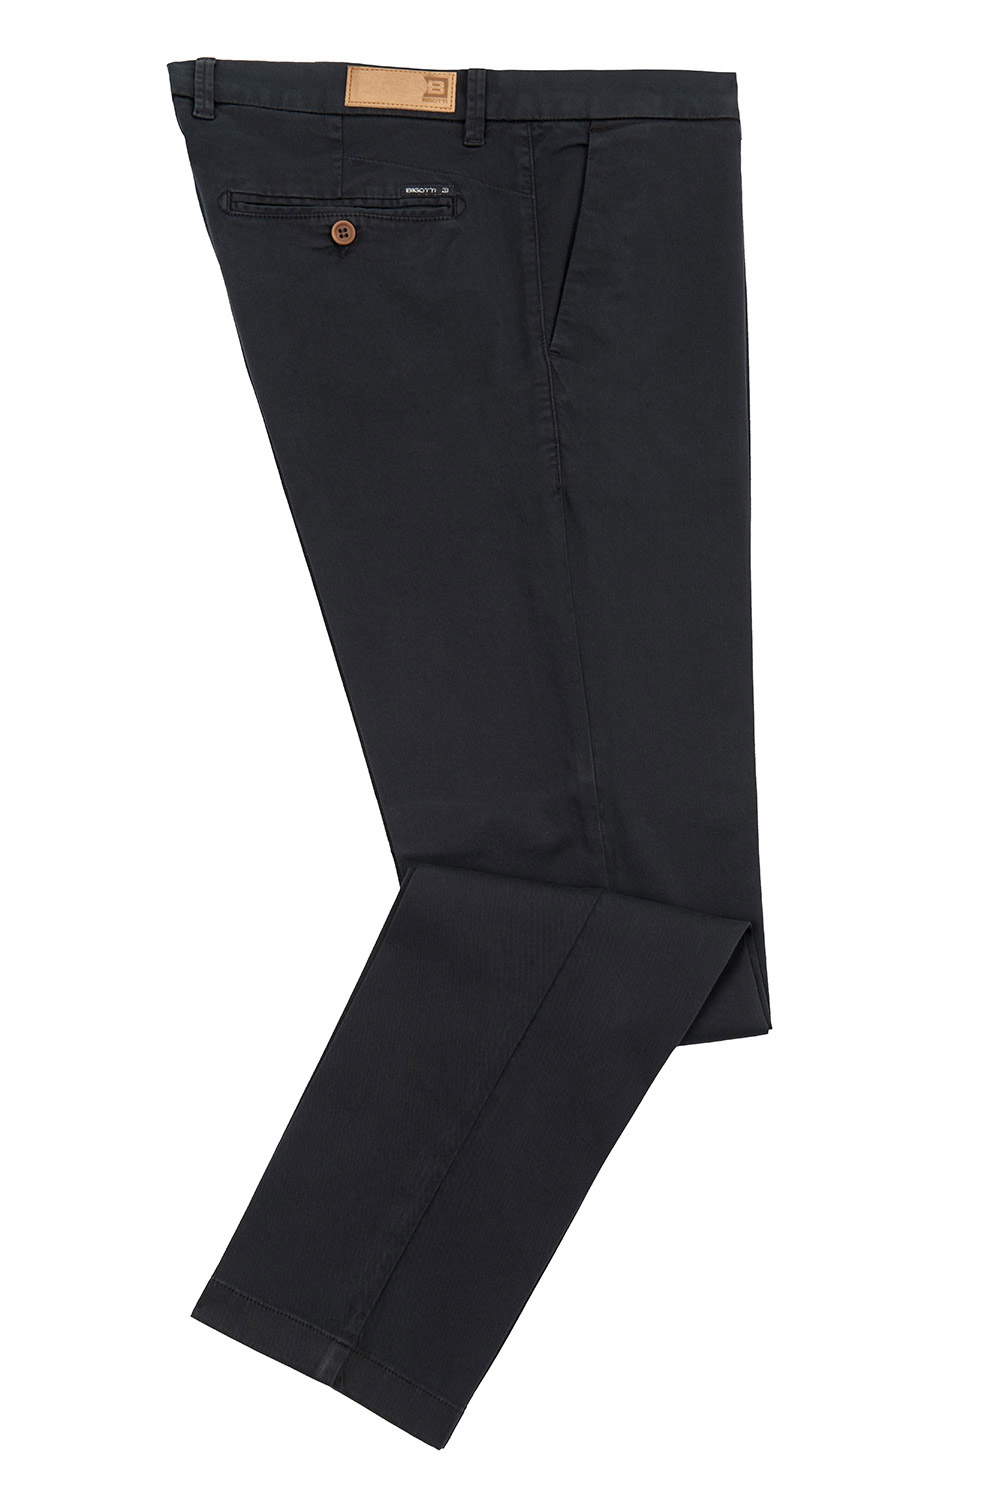 Pantaloni superslim marco bleumarin uni 1